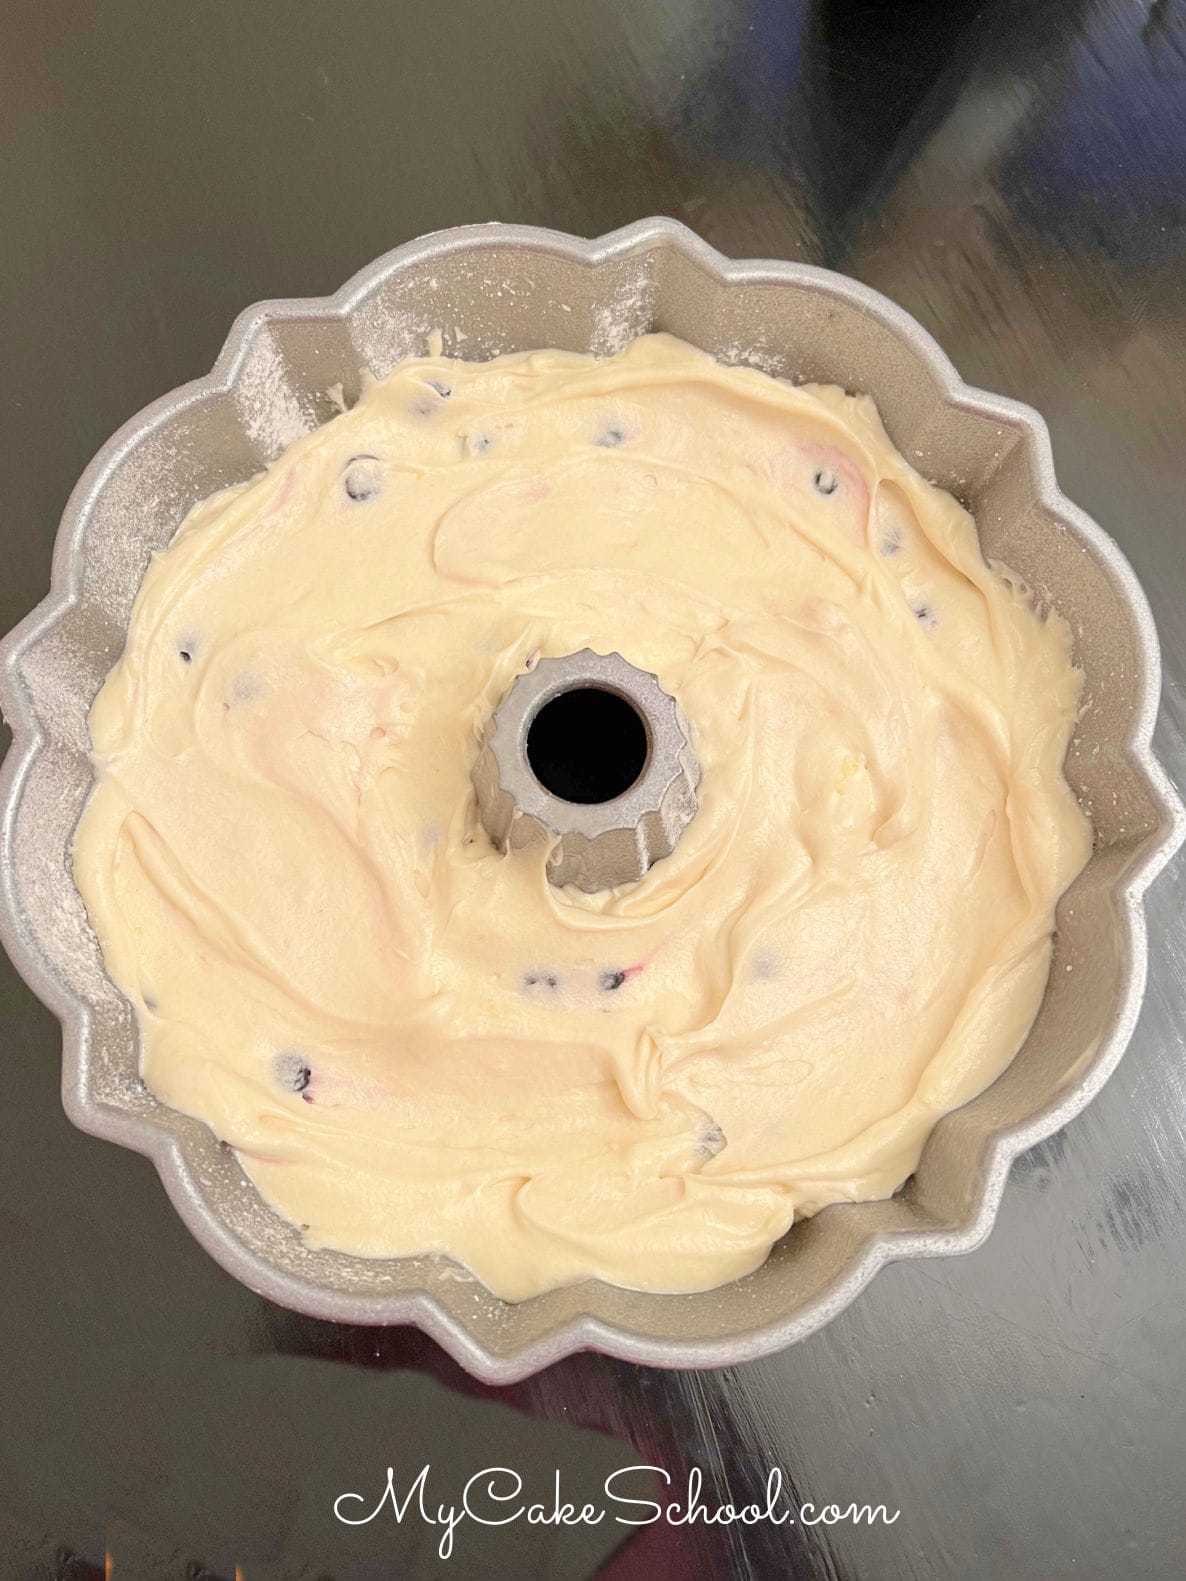 Lemon Blueberry Pound Cake Batter in Bundt Pan